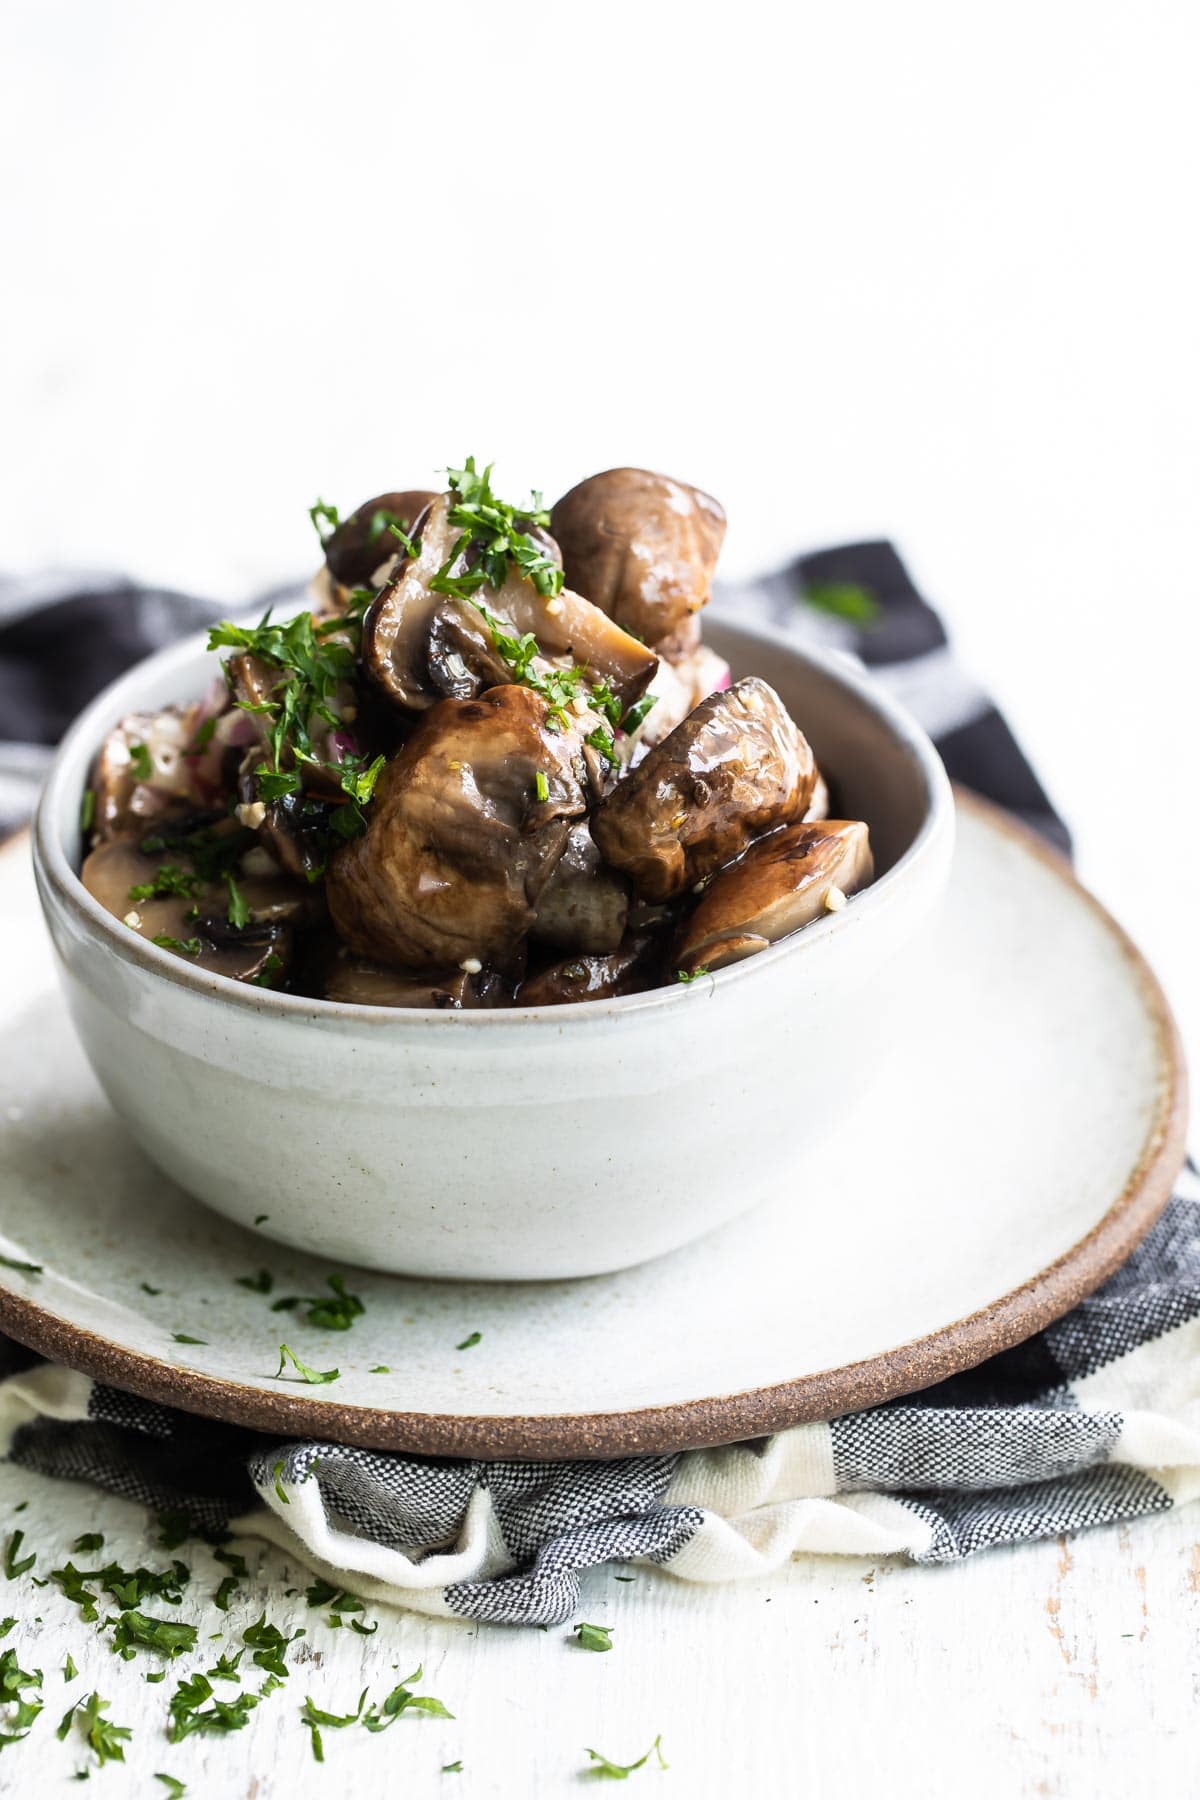 Marinated mushrooms in a gray bowl.